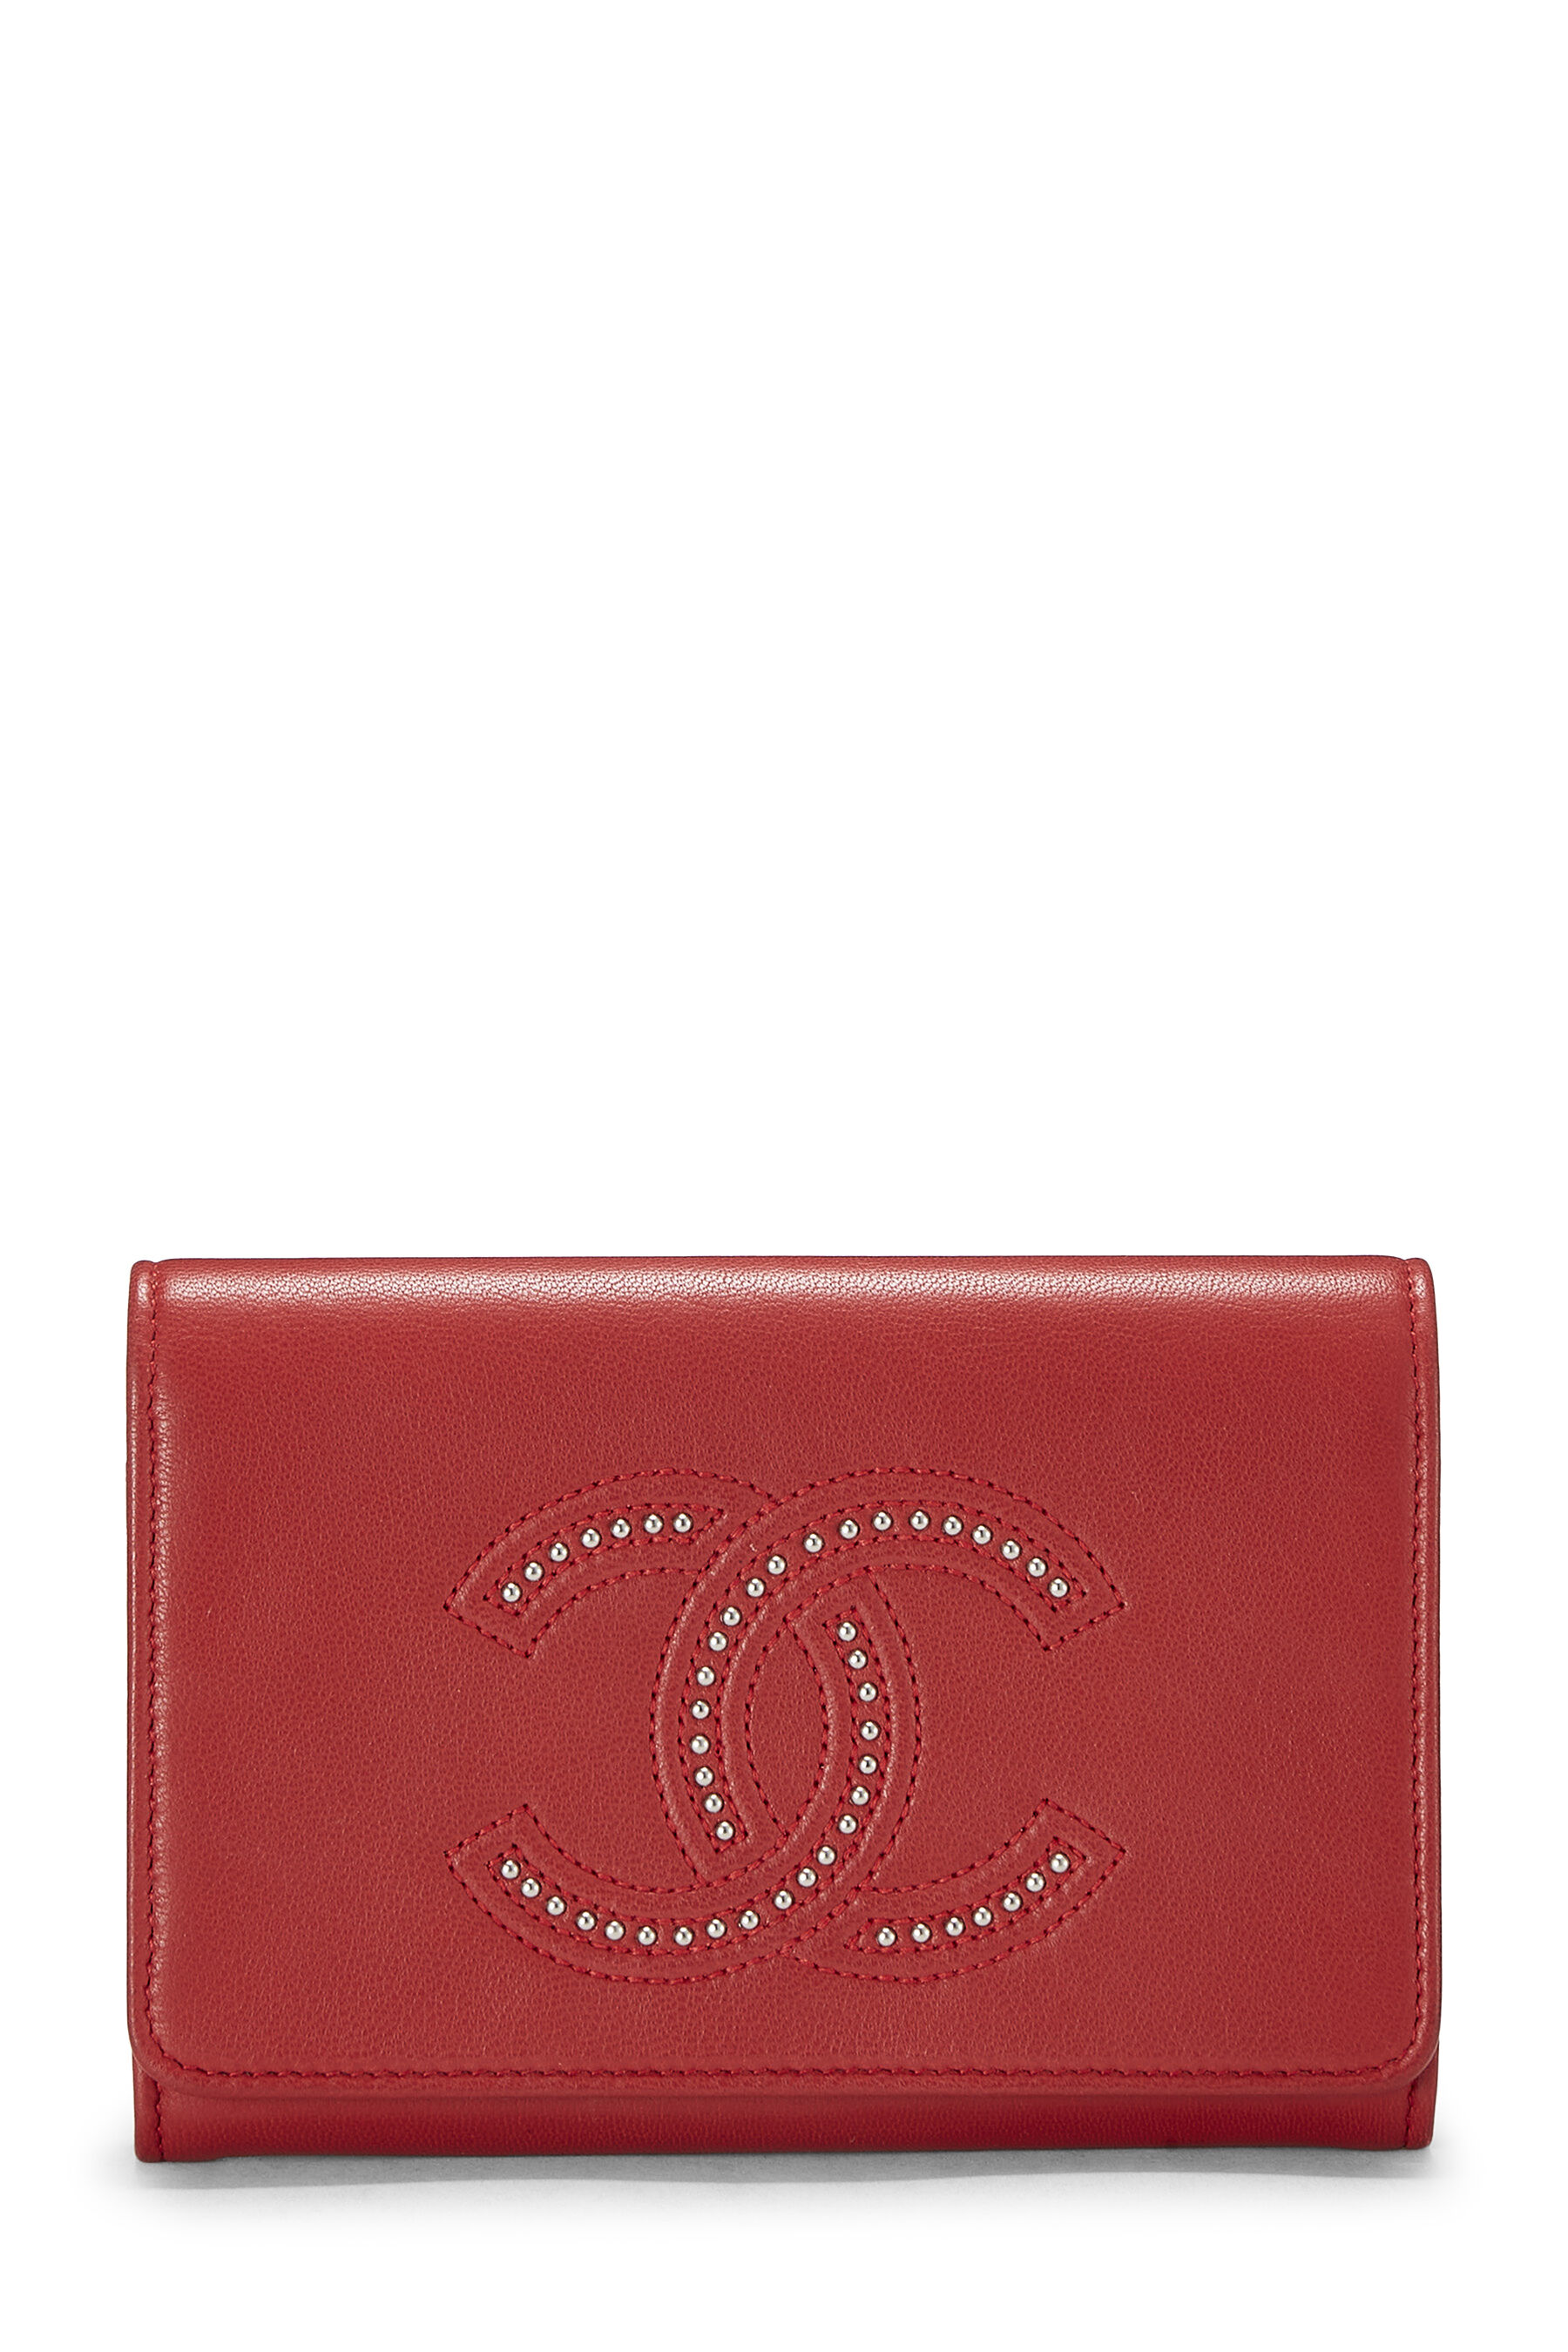 Chanel - Red Quilted Lambskin 19 Zip Around Wallet